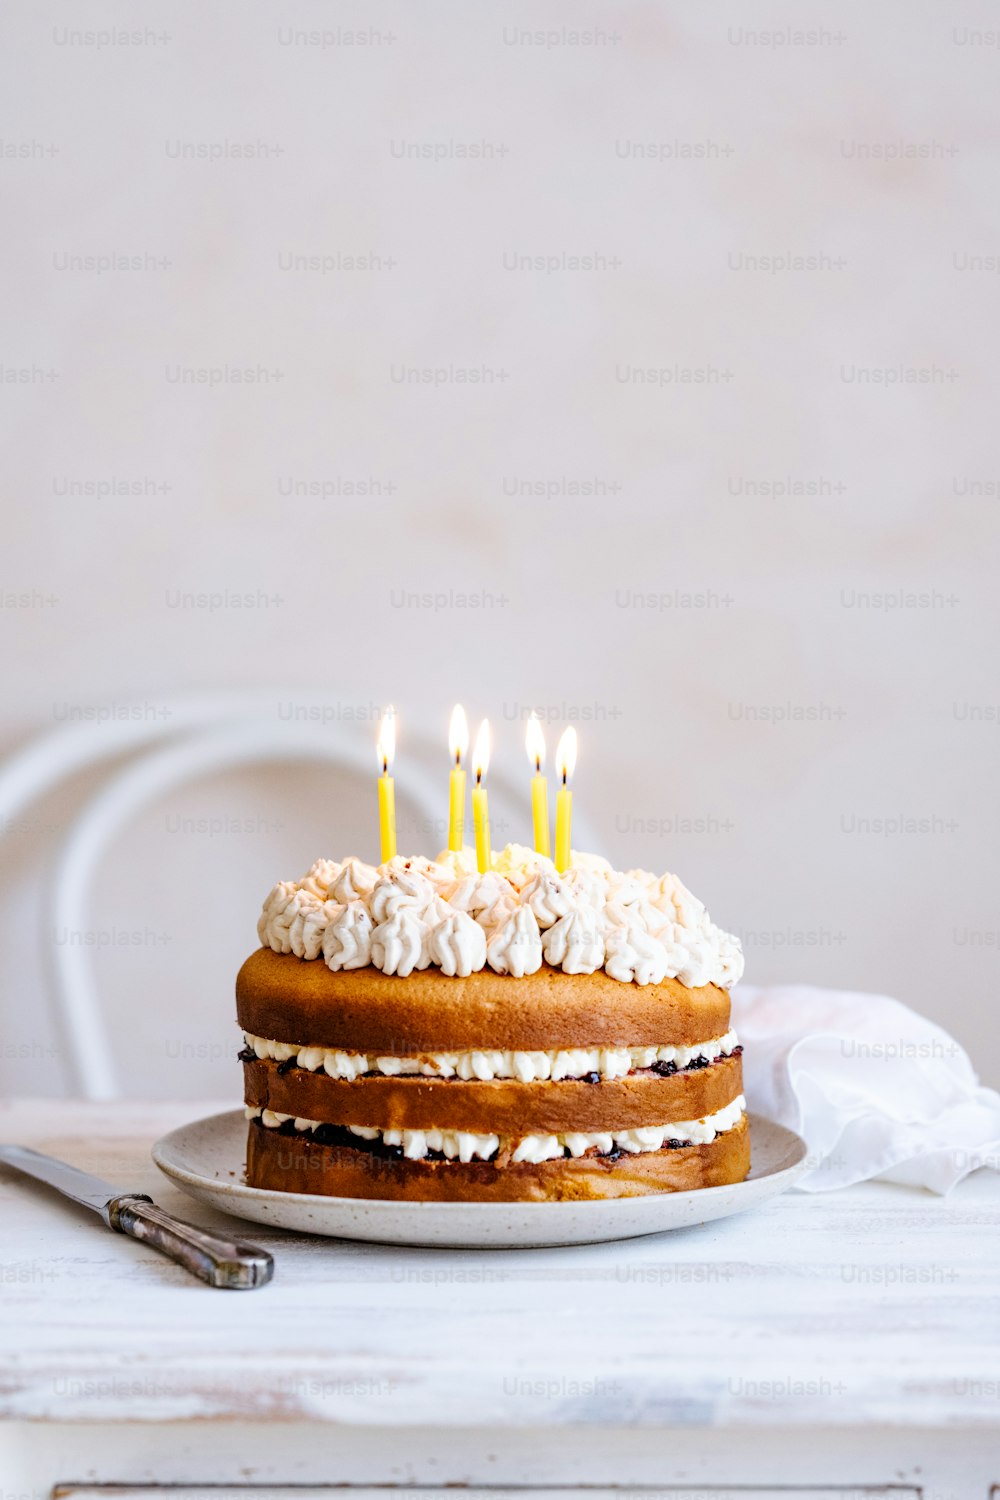 una torta con glassa bianca e candele accese